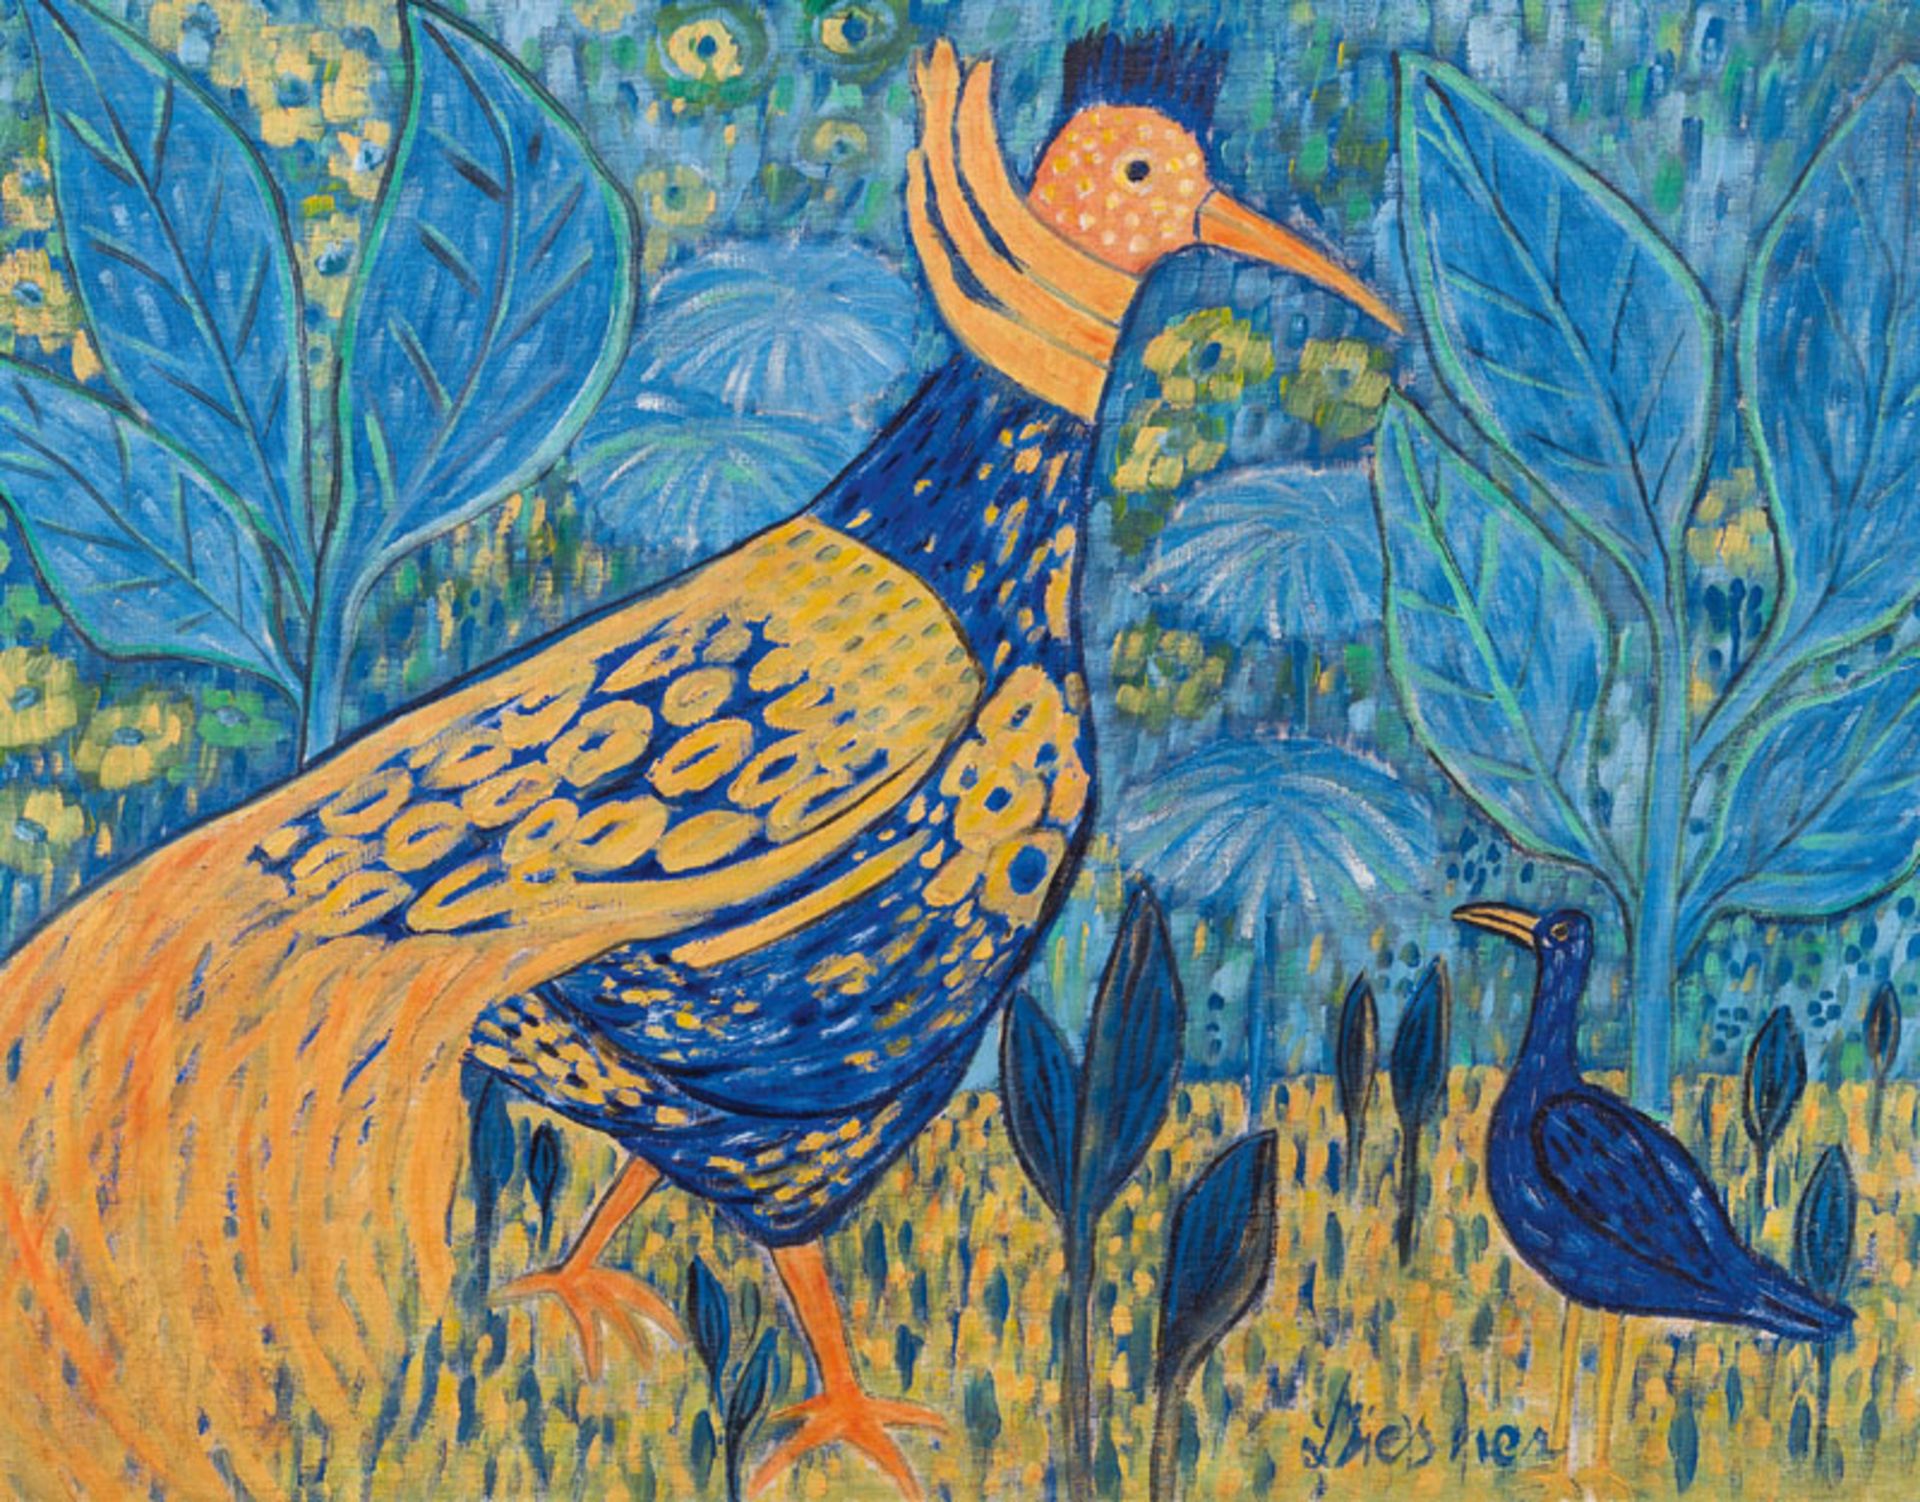 Gerhild Diesner *Birds of paradise, ca. 1974 oil on canvas on press board; 70 × 91 cm

Gerhild